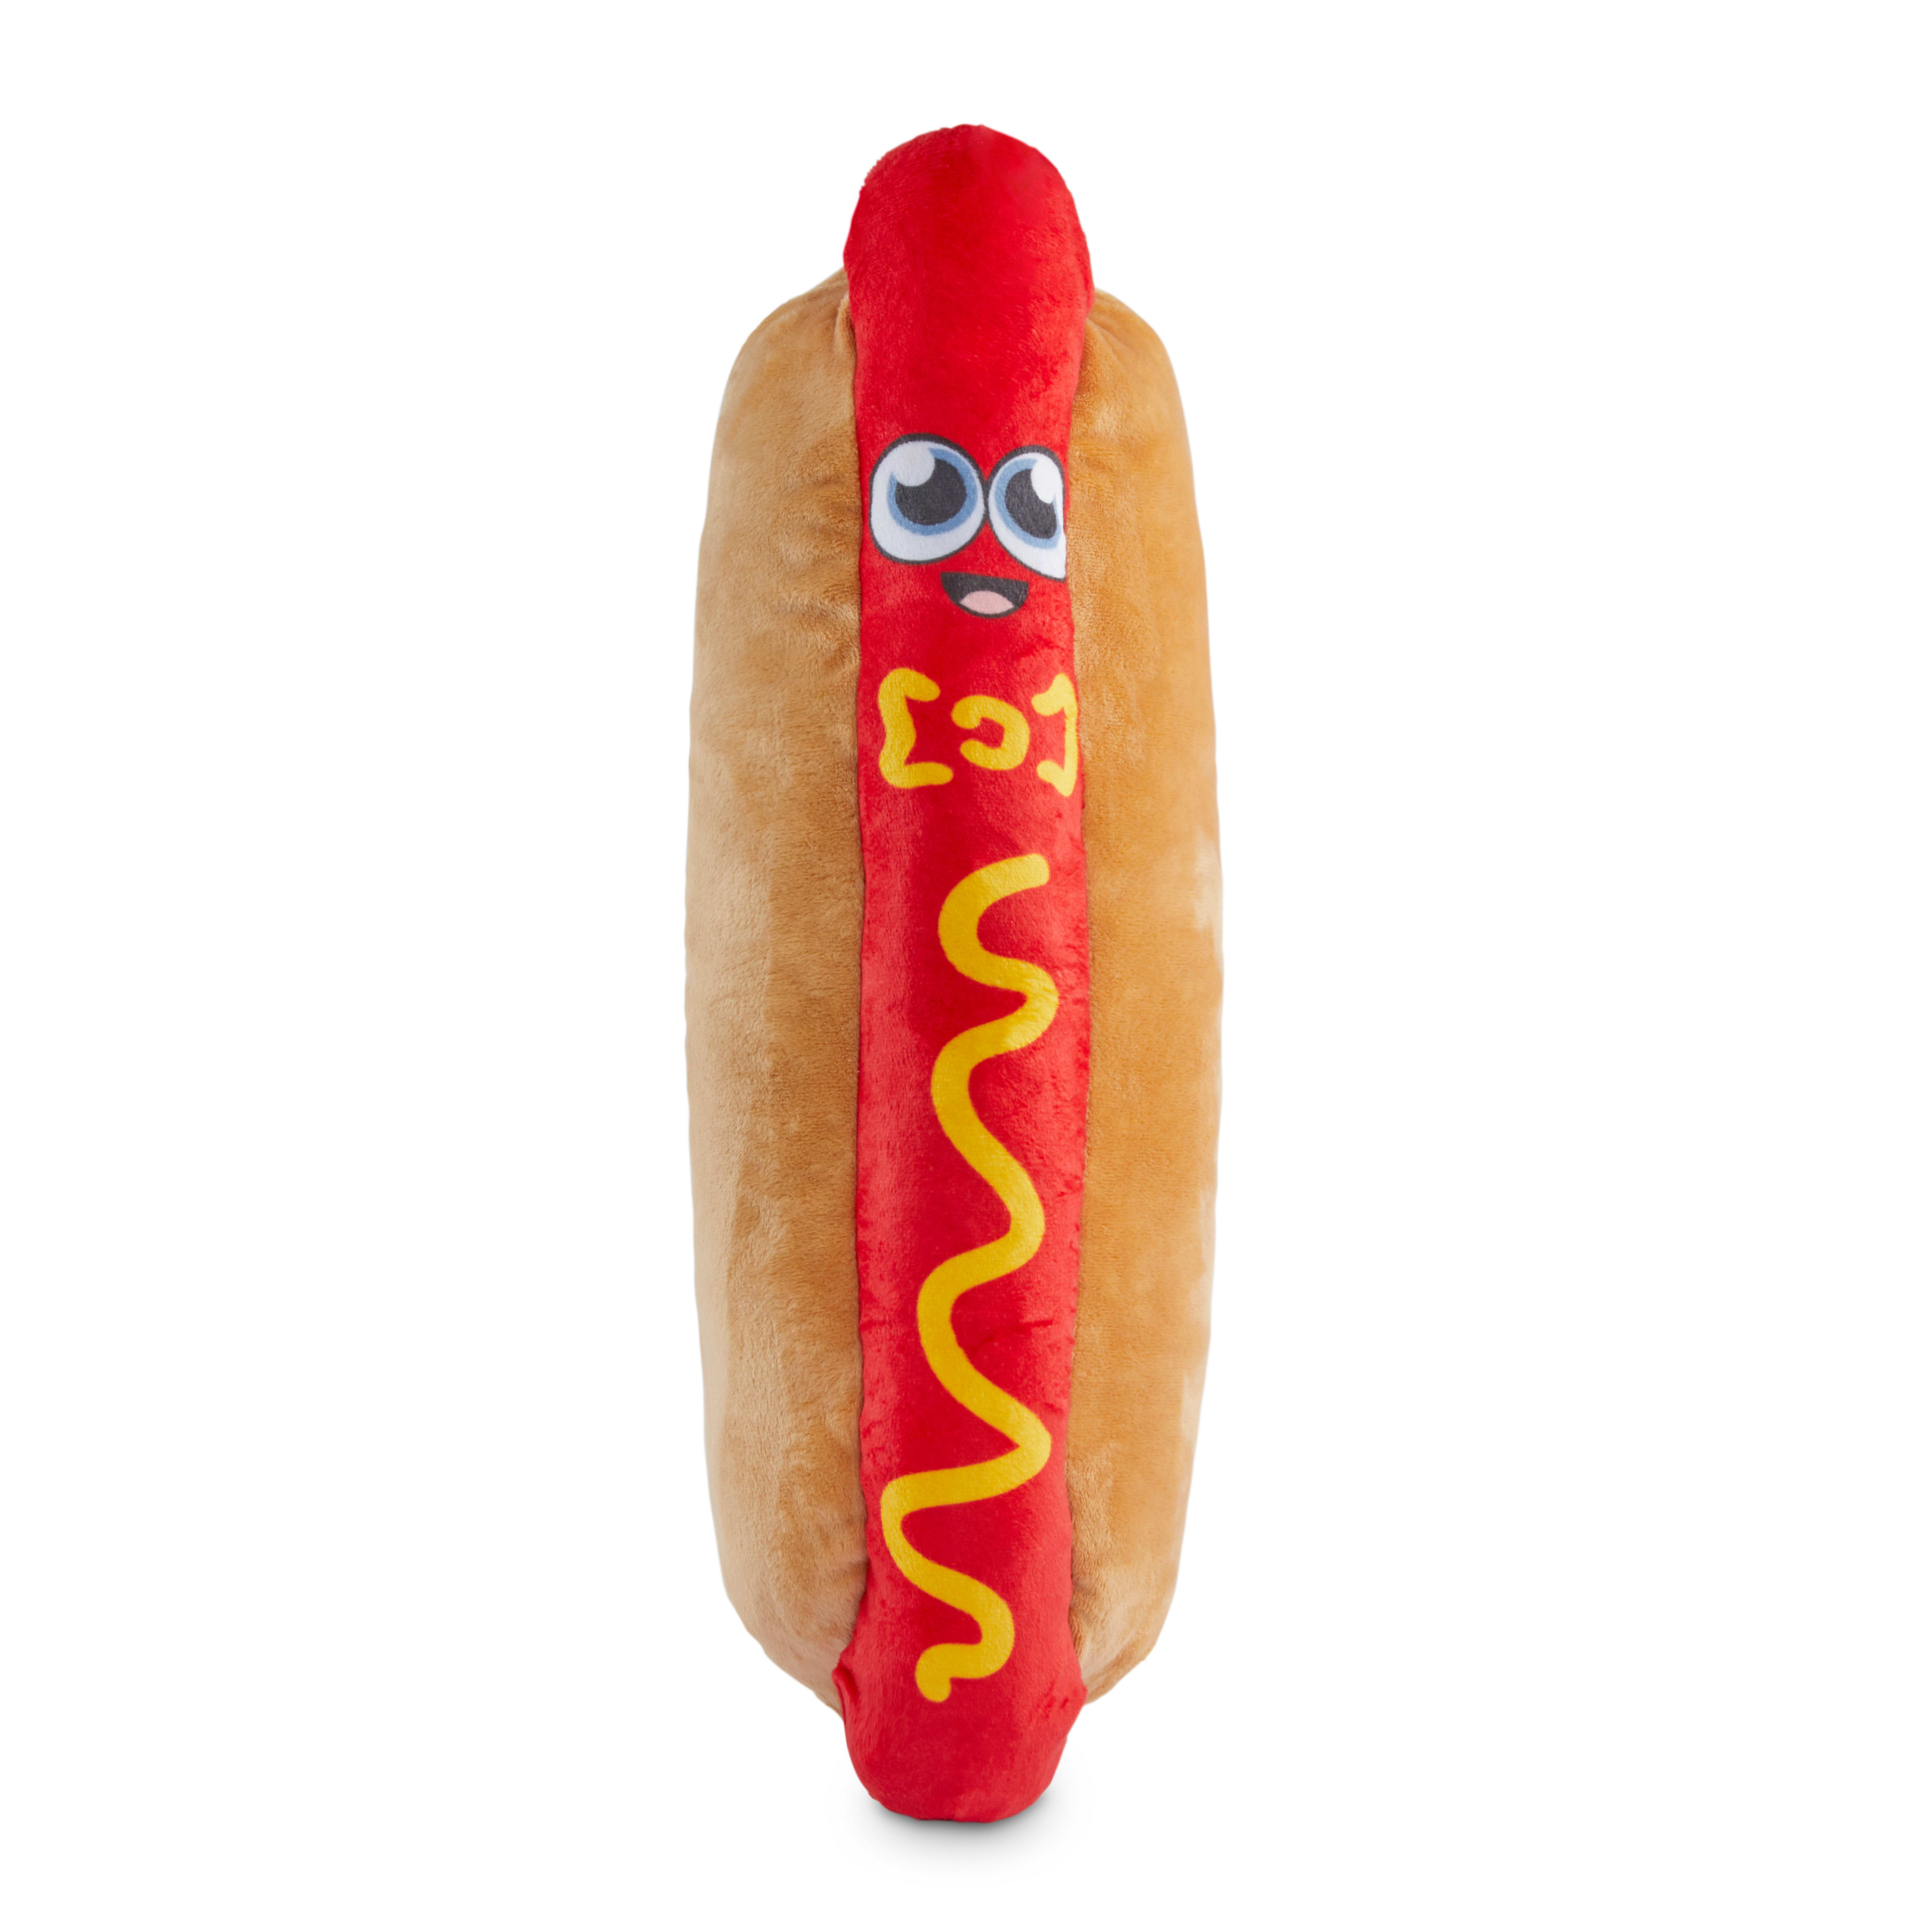 hot dog stuffed animal